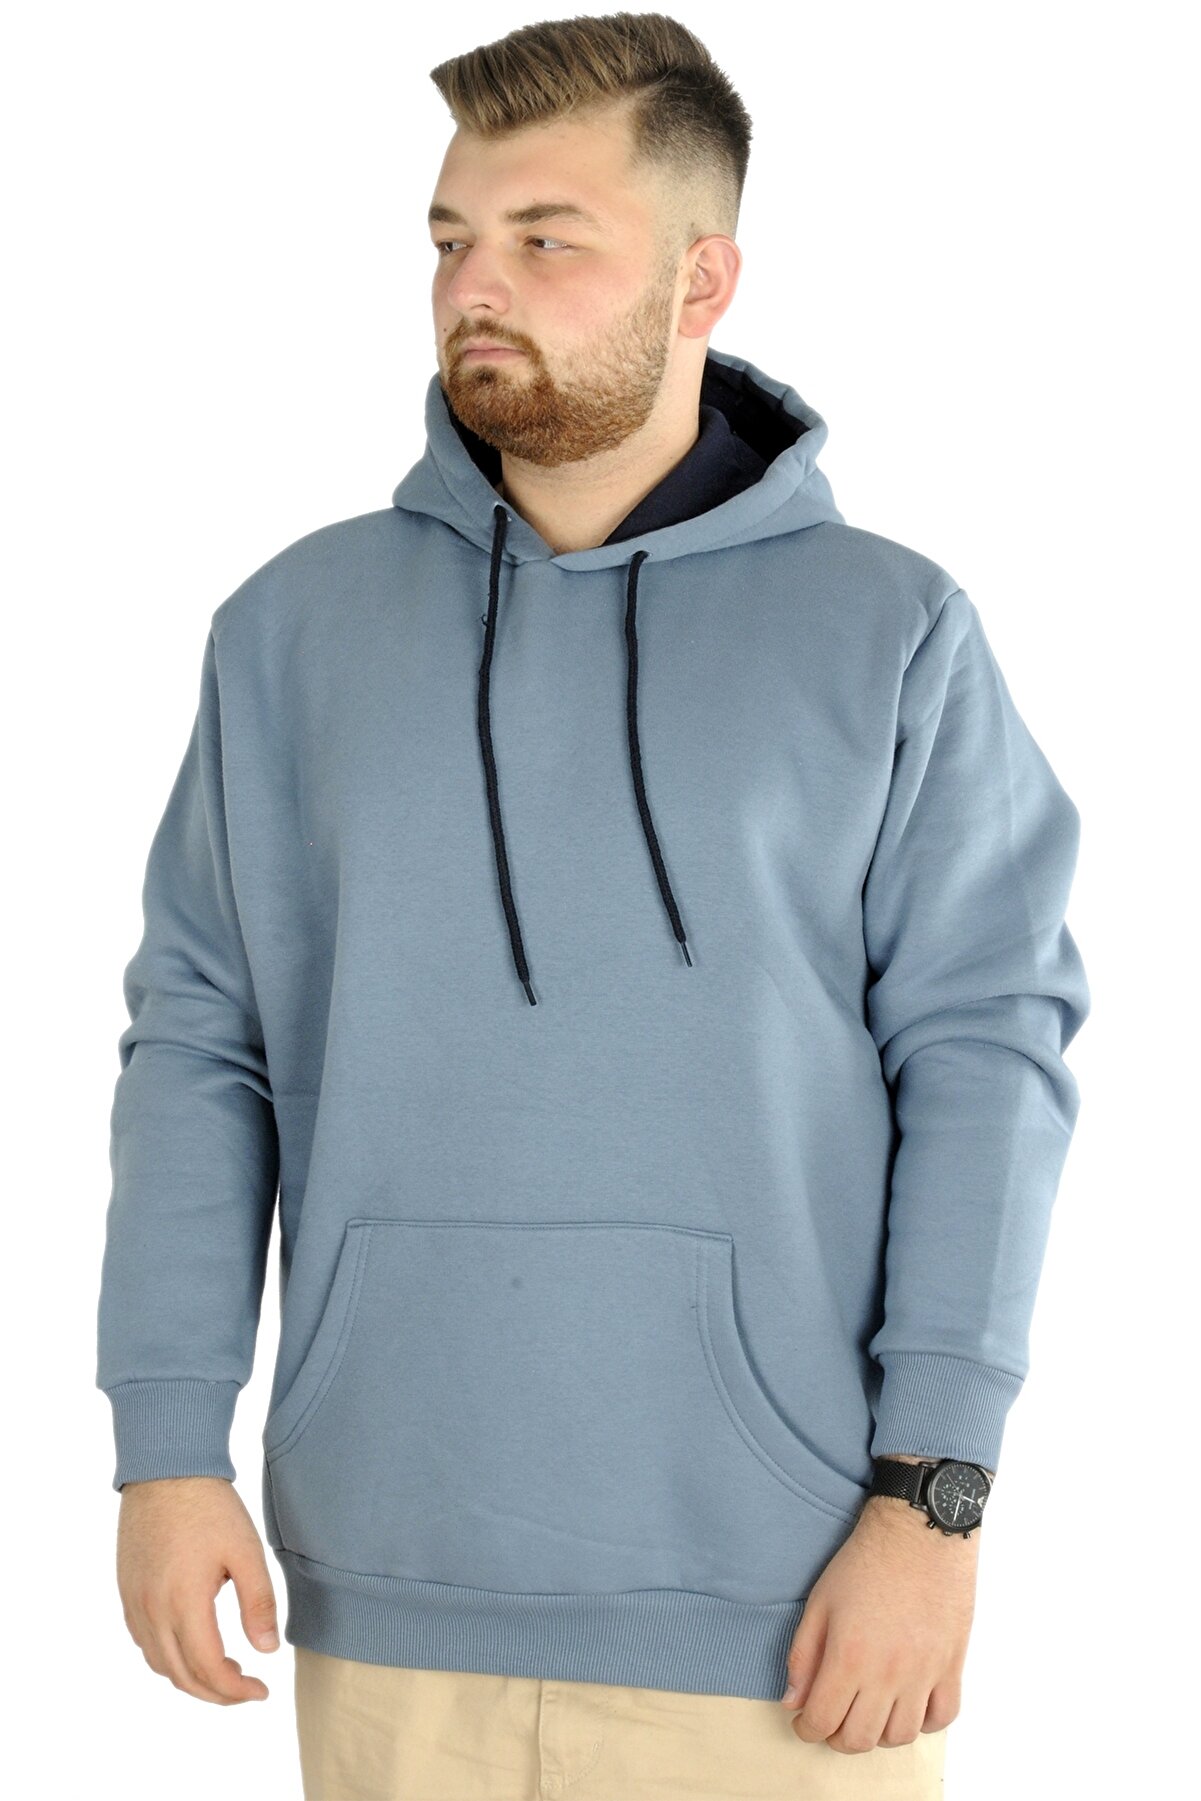 Modexl Mode Xl Erkek Sweatshirt Kapşonlu Pocket Basic 20562 Mavi